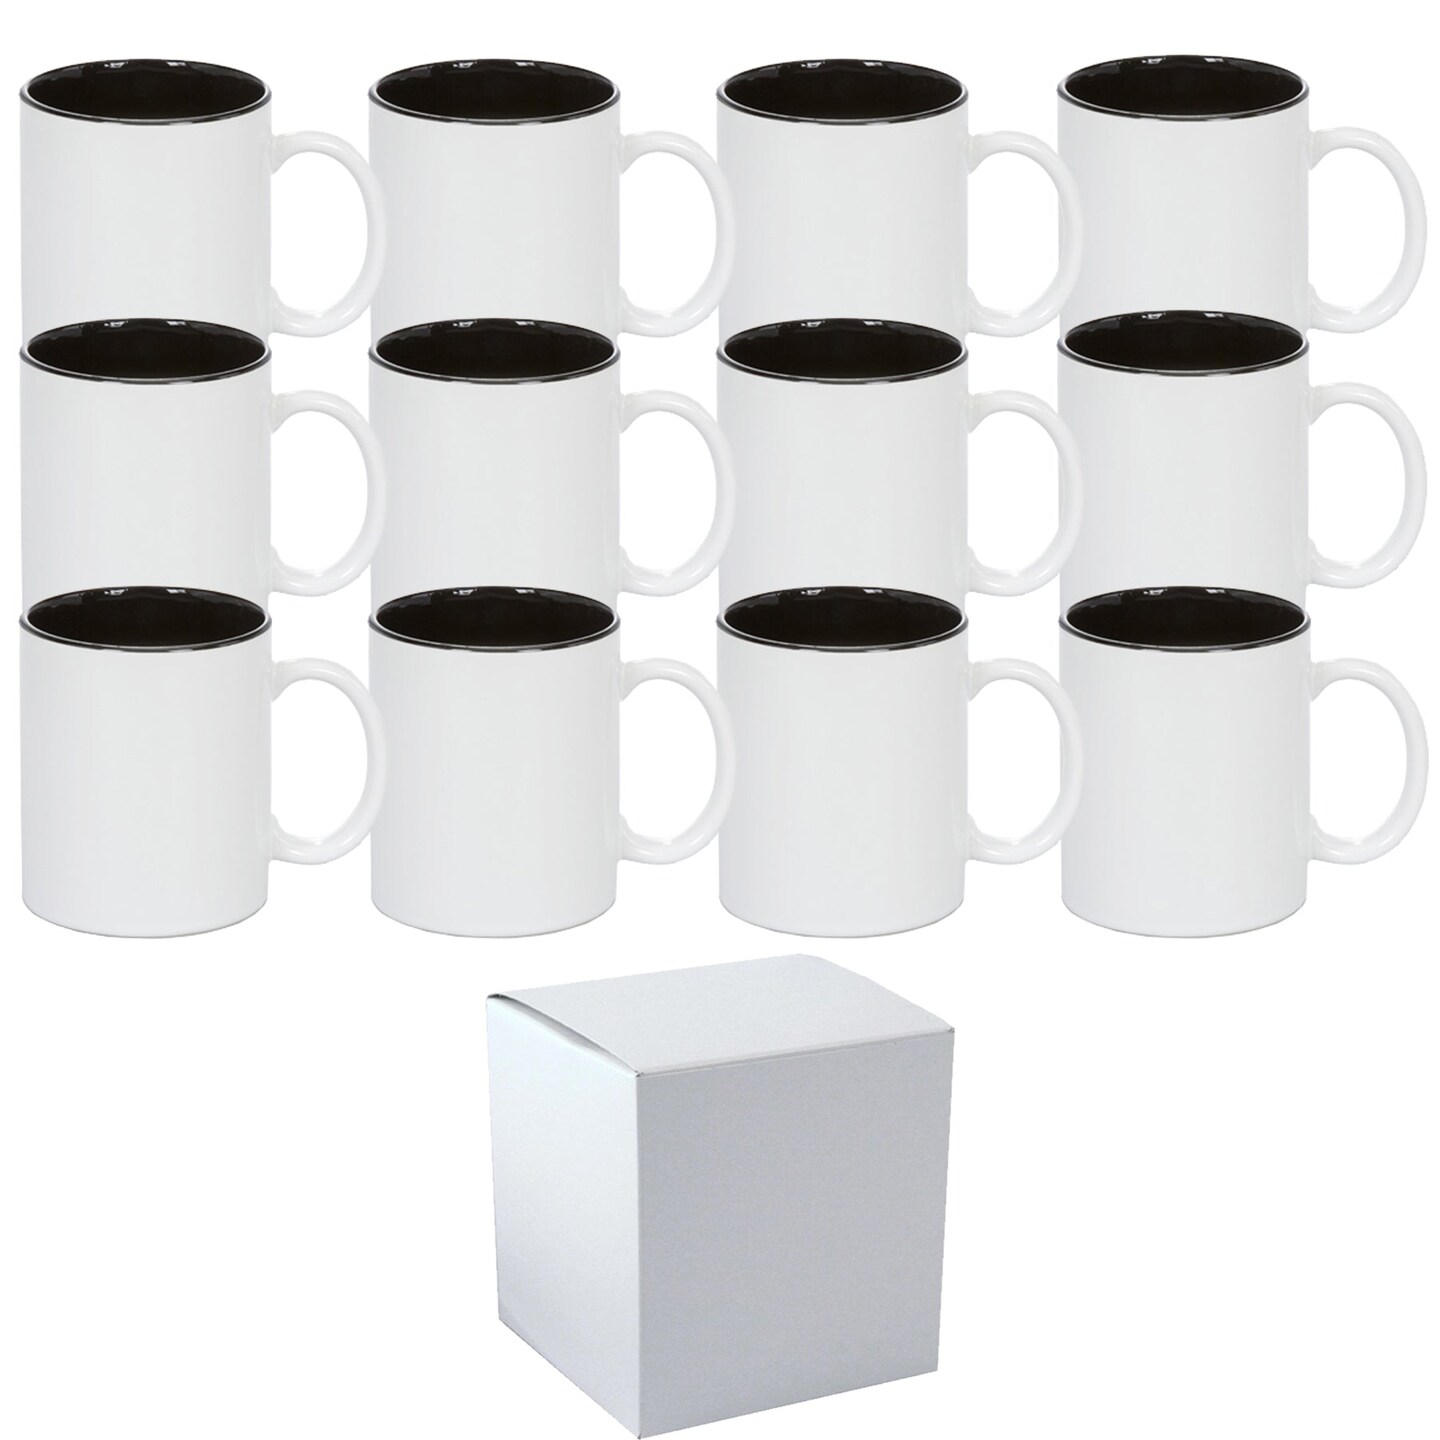 Gift Urself Best Manager - Black Ceramic Coffee - Birthday